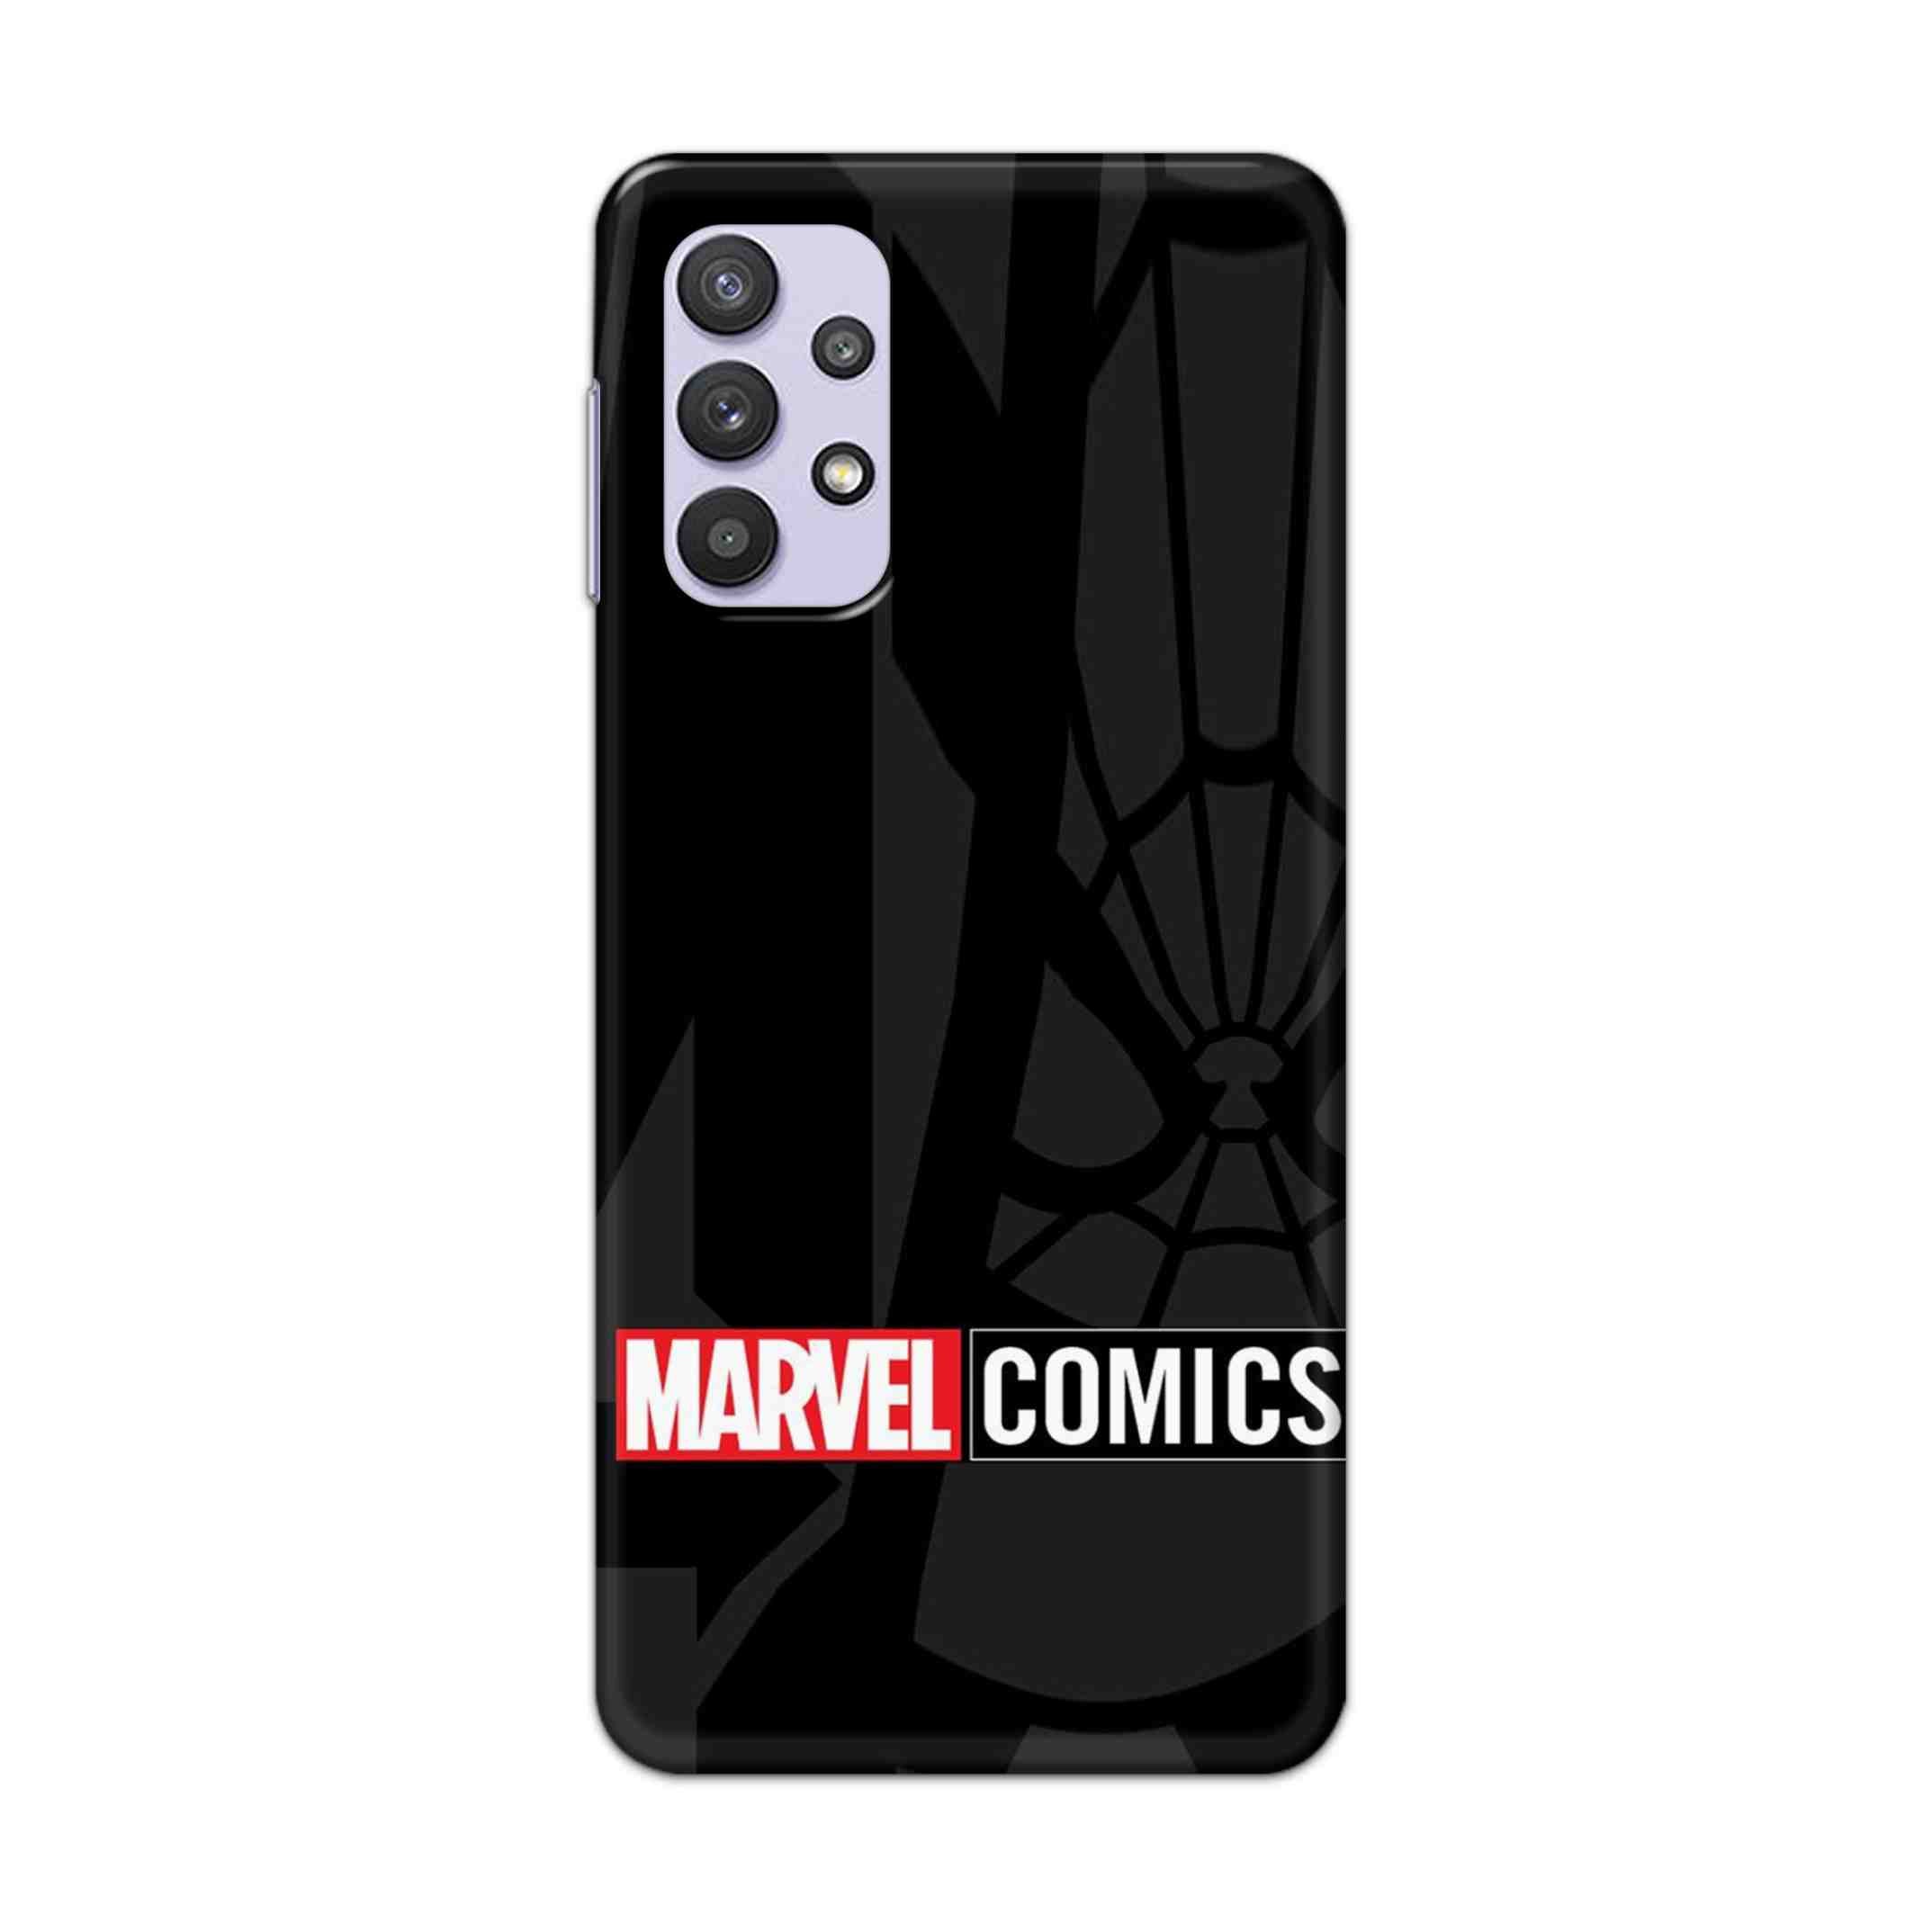 Buy Marvel Comics Hard Back Mobile Phone Case Cover For Samsung A32 4G Online